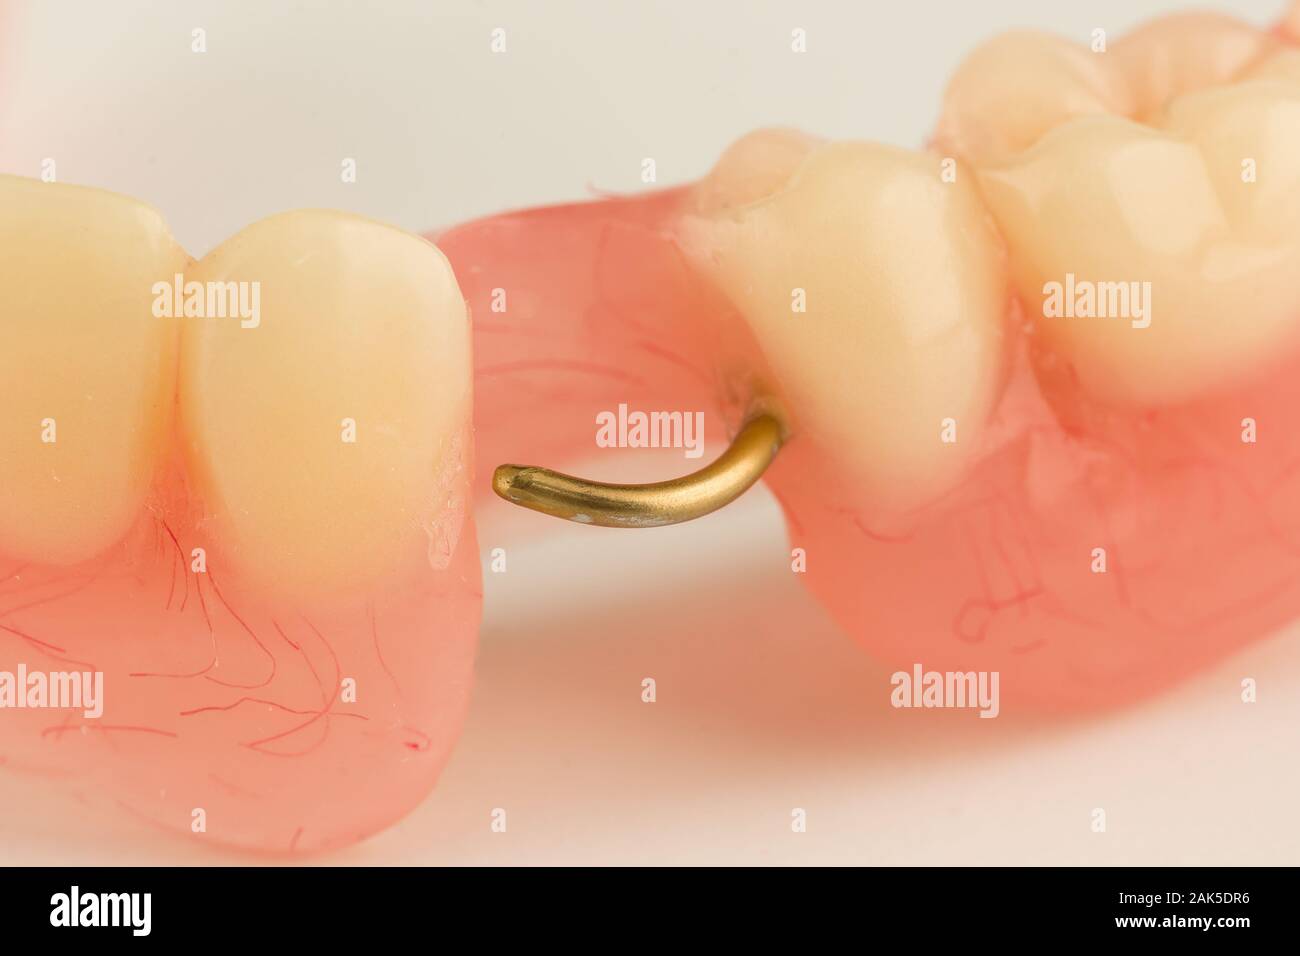 acrylic dental prosthesis with metal retaining elements Stock Photo